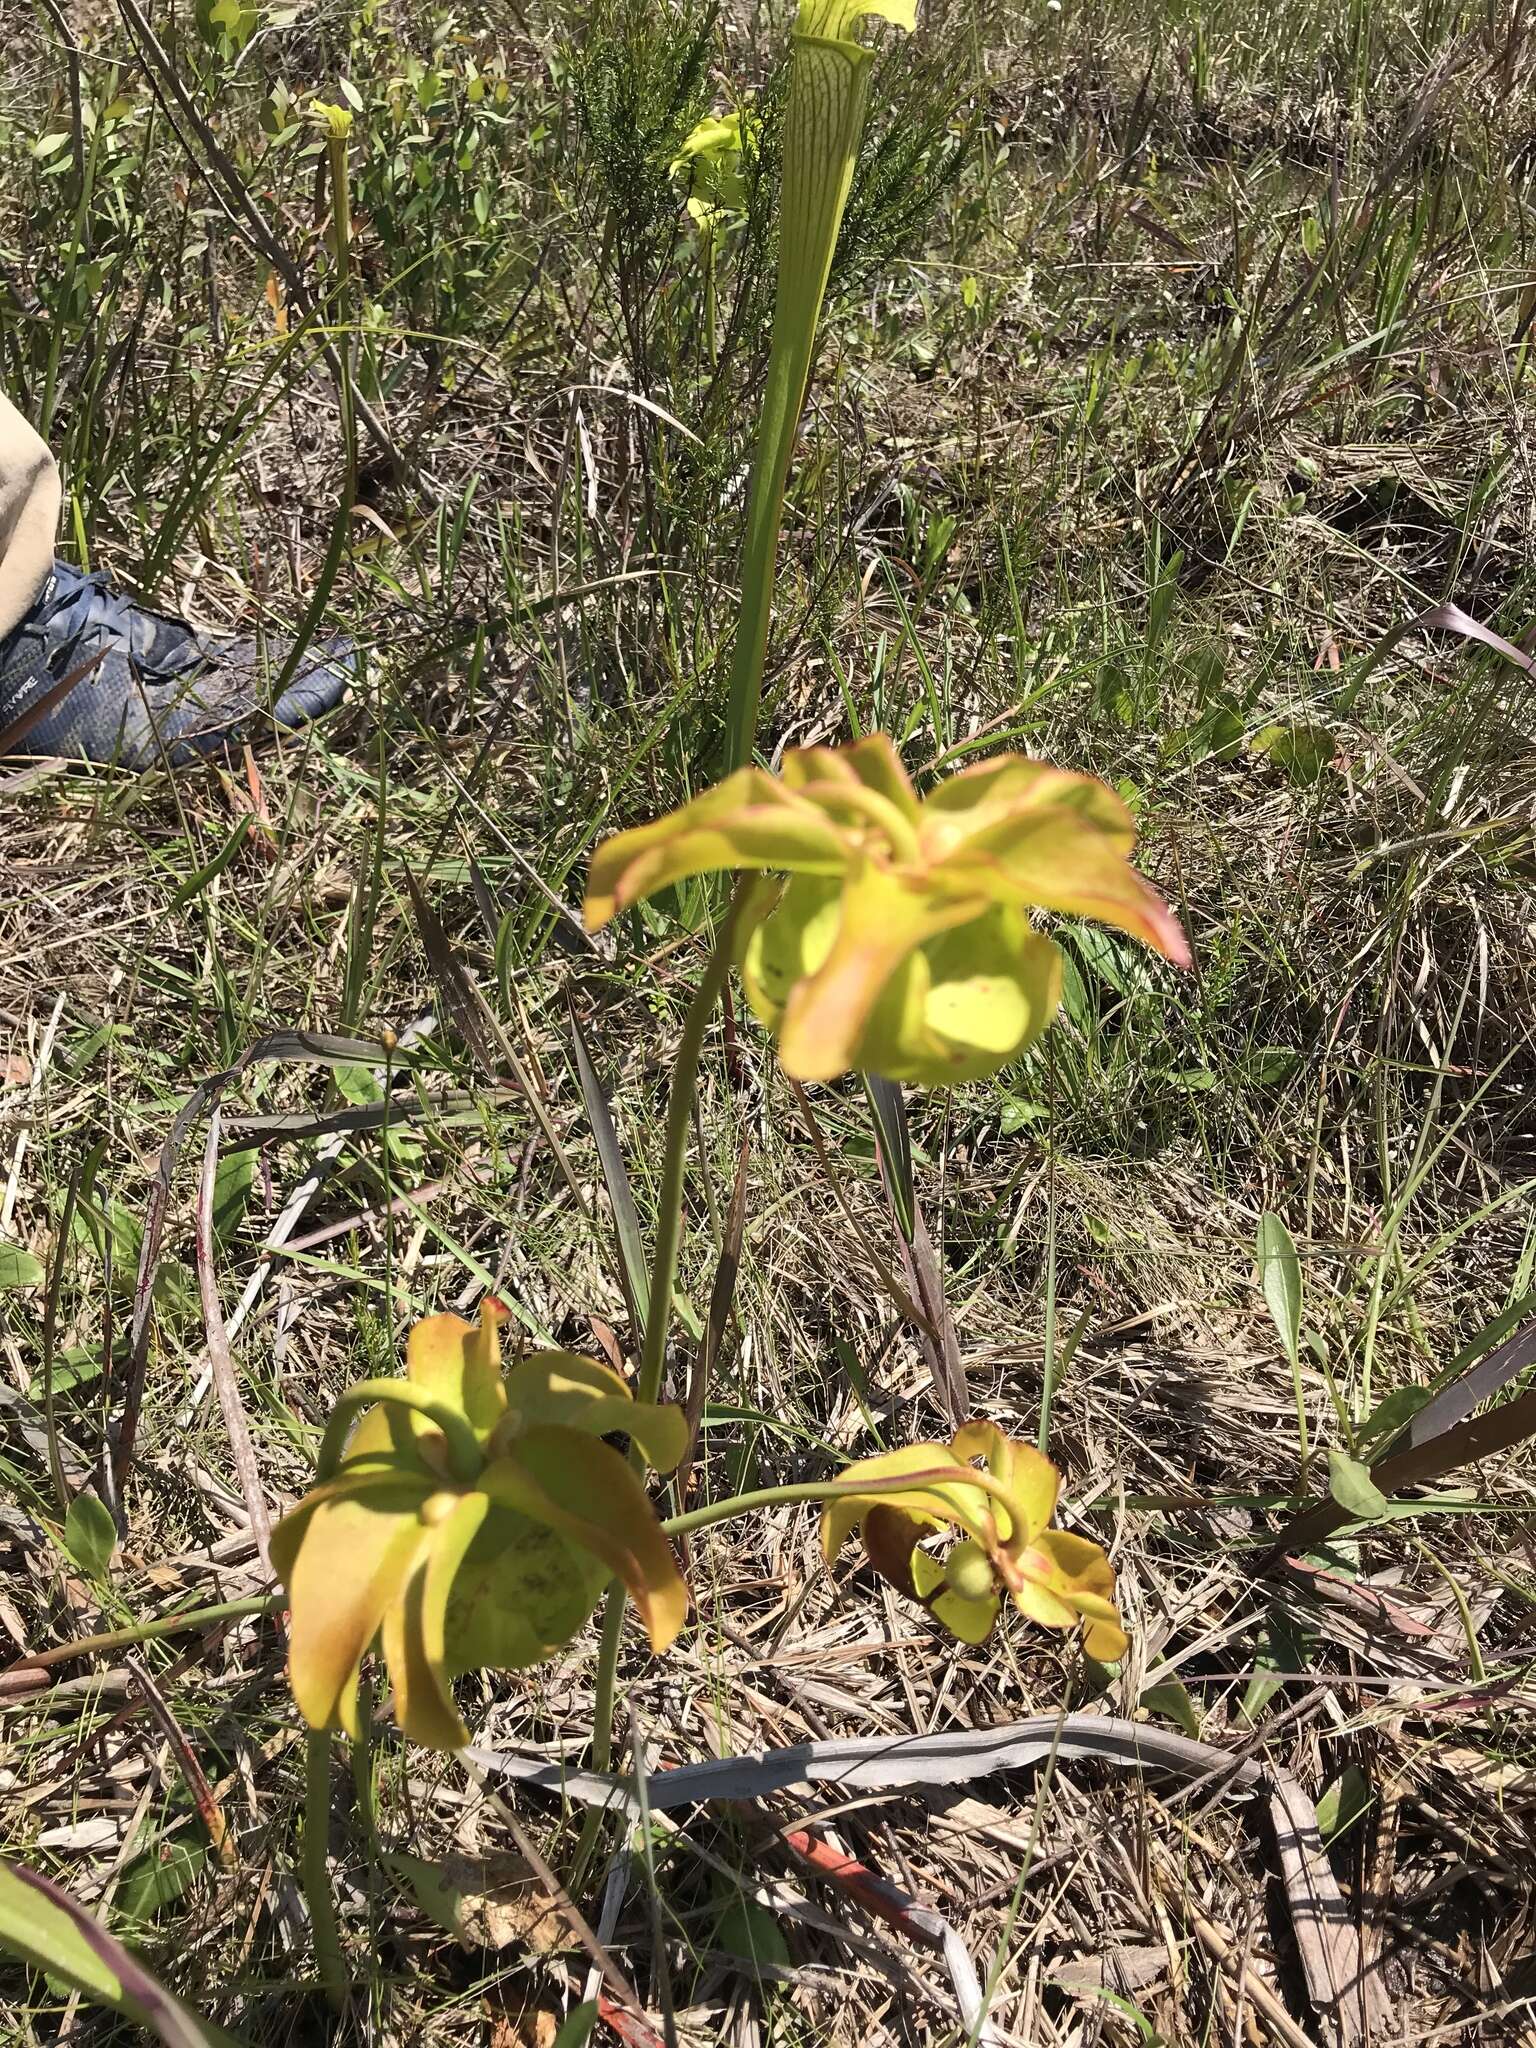 Image of pitcherplant